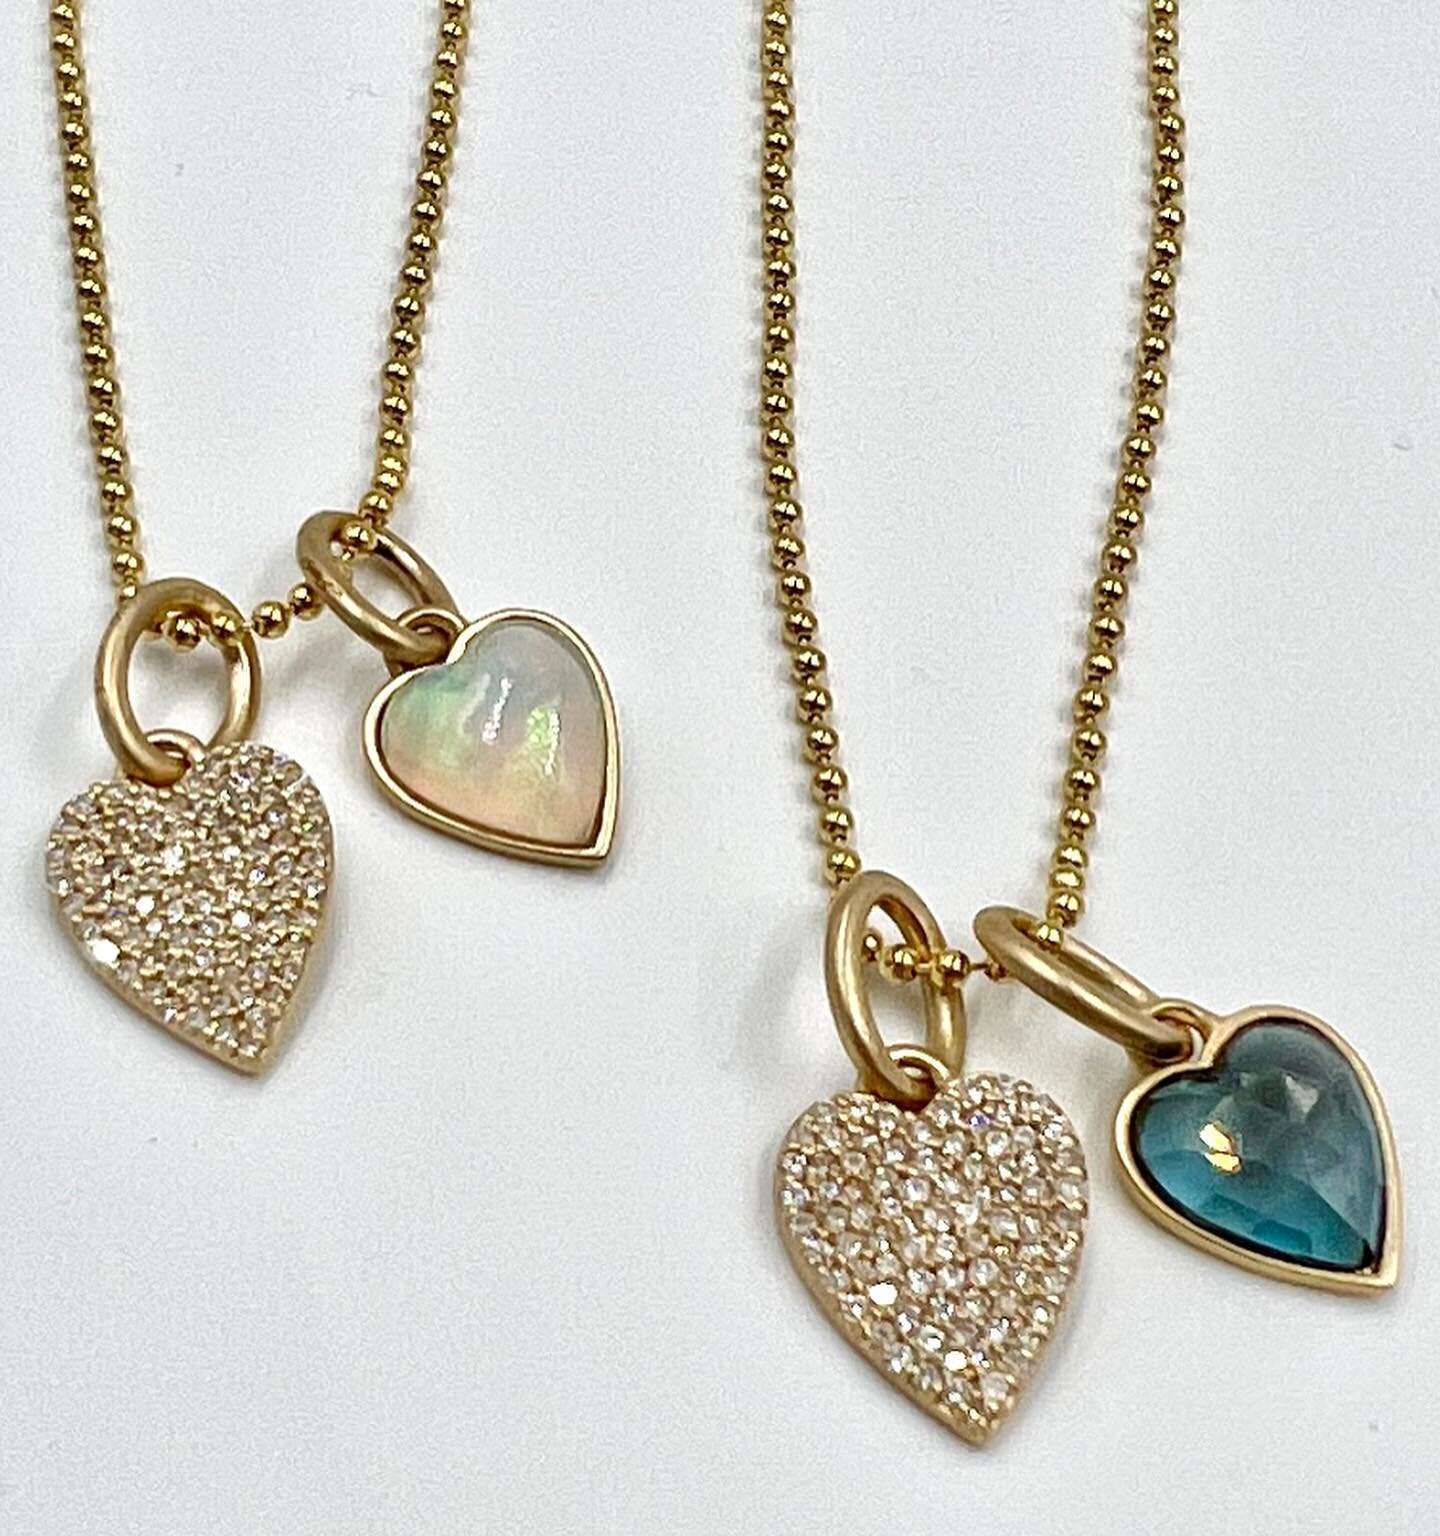 Have a heart and swipe left for hugs and kisses💕
.
.
.
.
#hearts #londonbluetopaz #opal #gold #diamonds #diamondheart #newdesigns #wishlist #giftsforher #everydayjewelry #layerednecklaces #charms #designerjewelry #austintx 
.
.
.
.